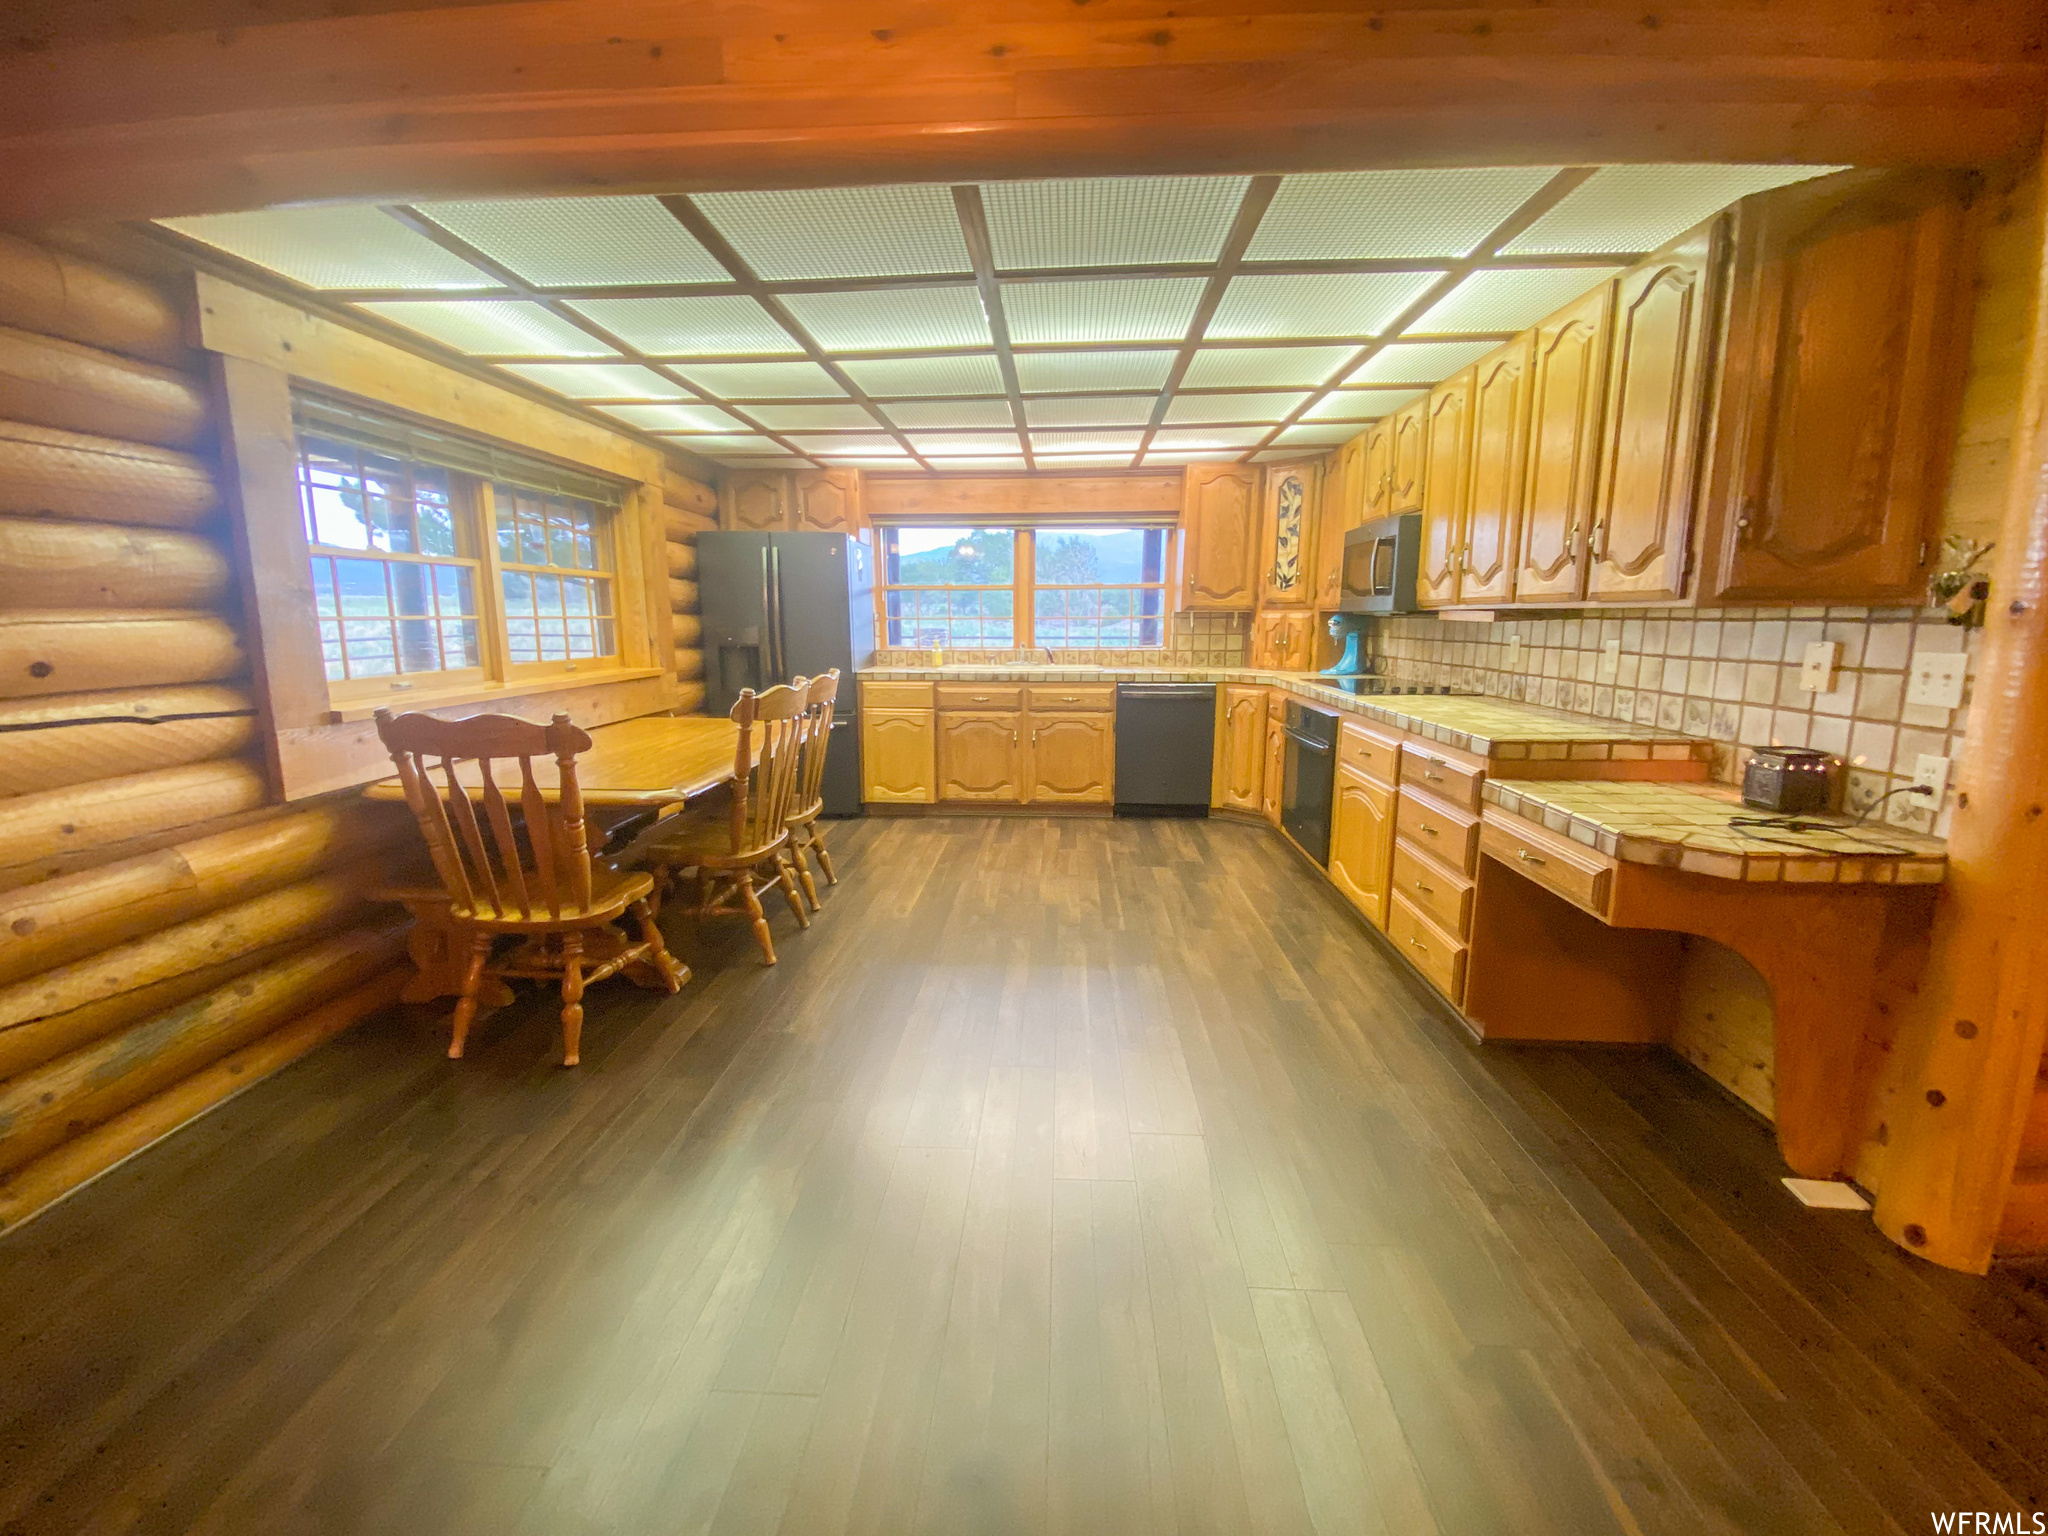 Kitchen with tile countertops, stainless steel appliances, rustic walls, tasteful backsplash, and dark wood-type flooring